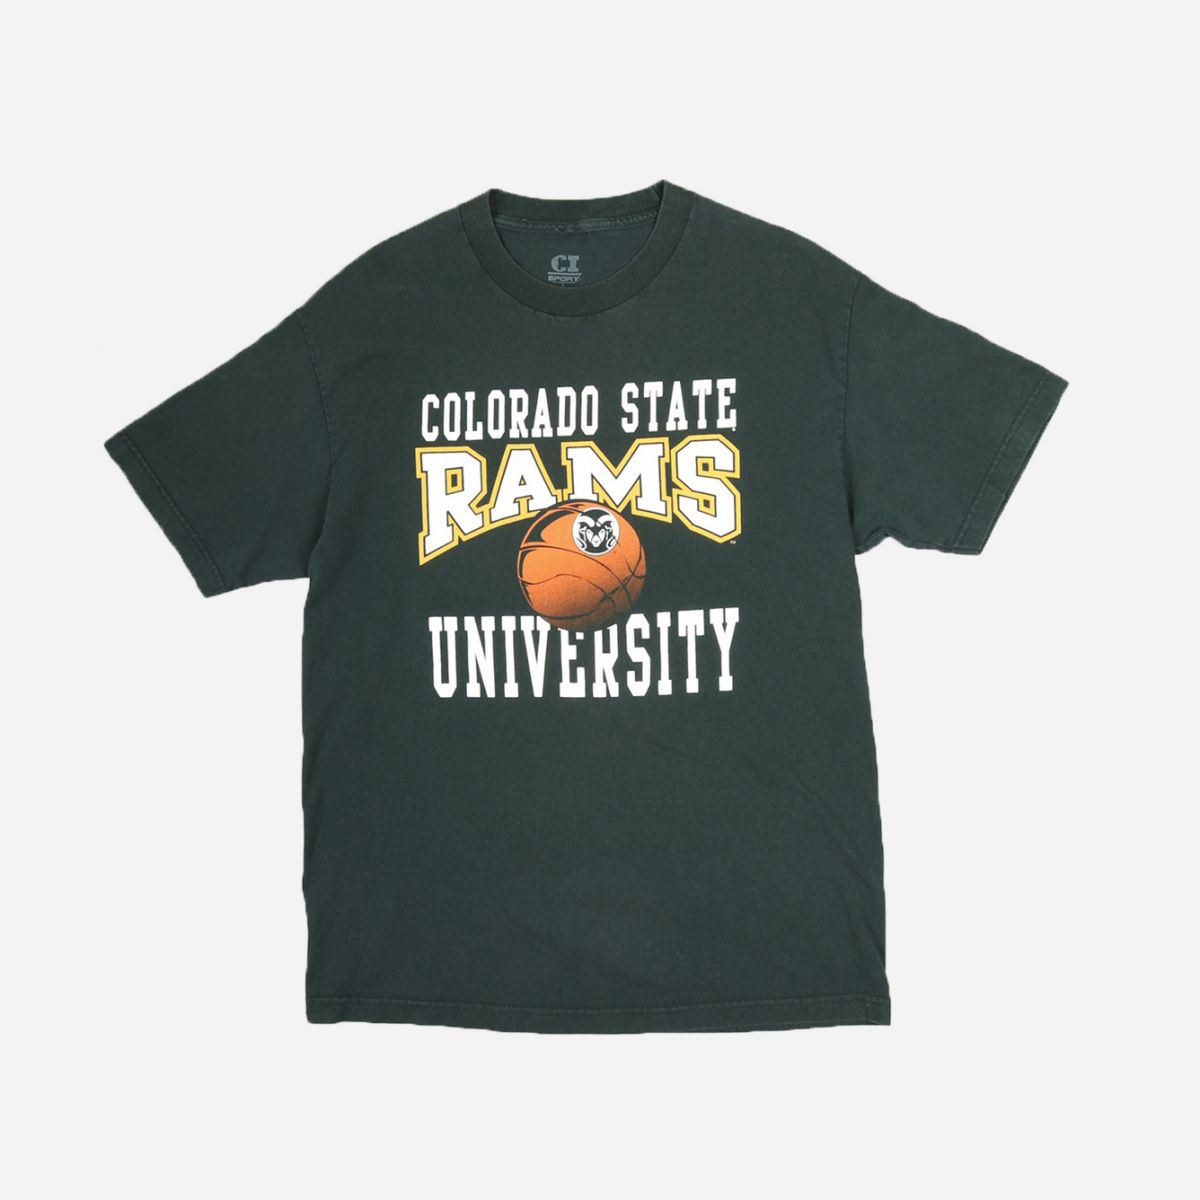 Colorado State Rams University Vintage Tee - Green